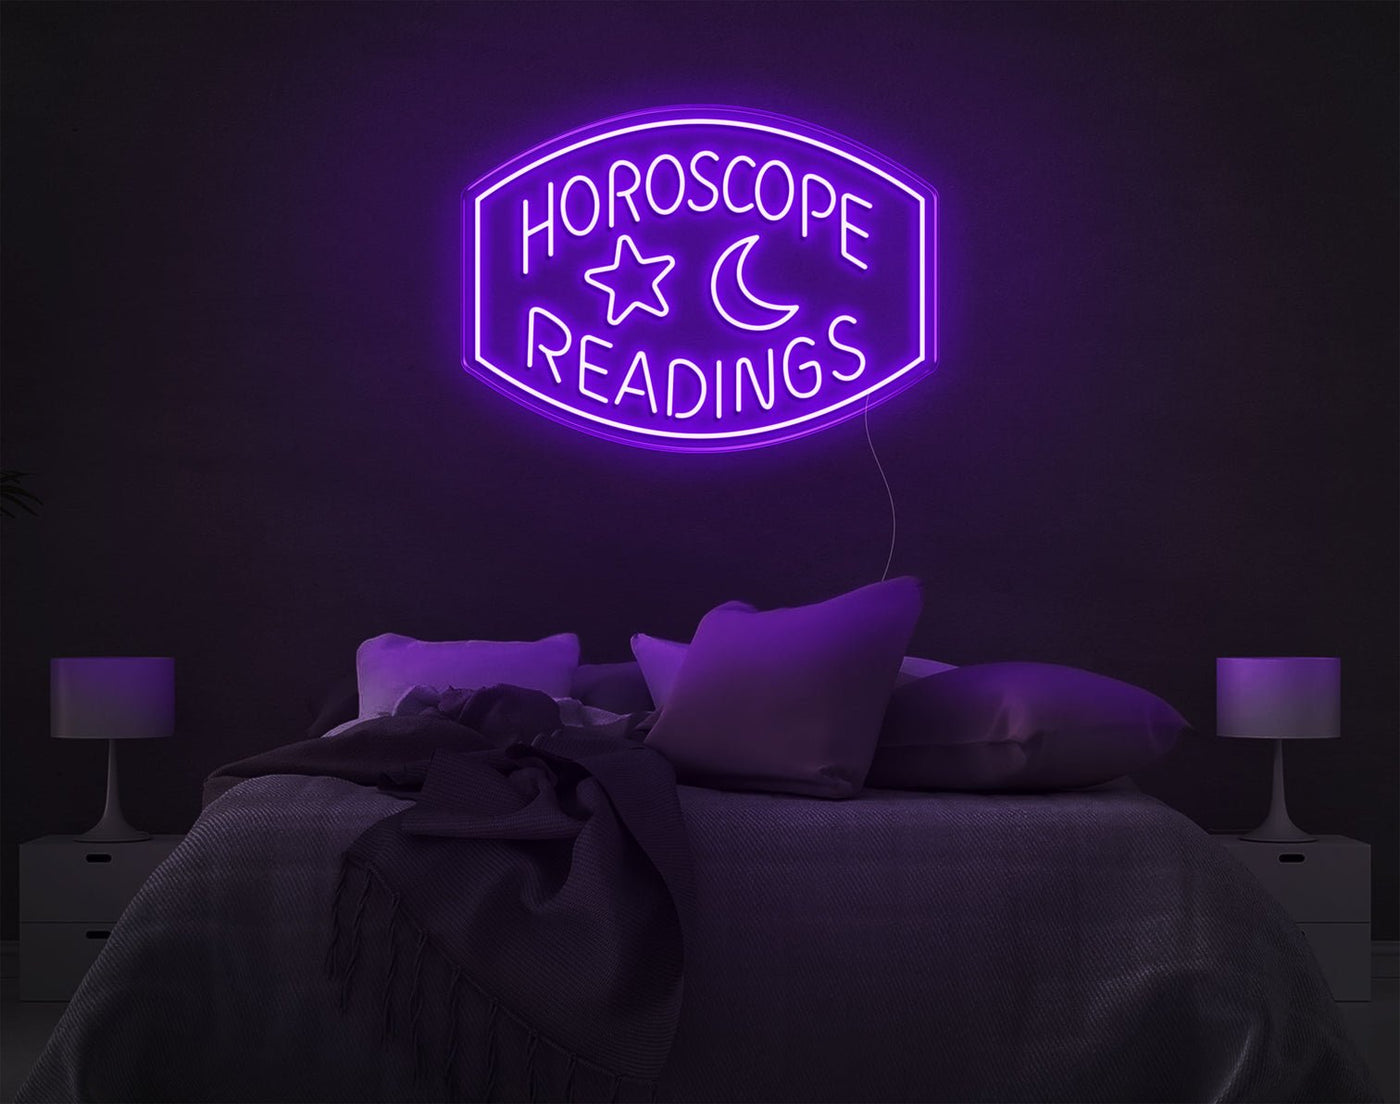 Horoscope Readings LED Neon Sign - 20inch x 28inchPurple